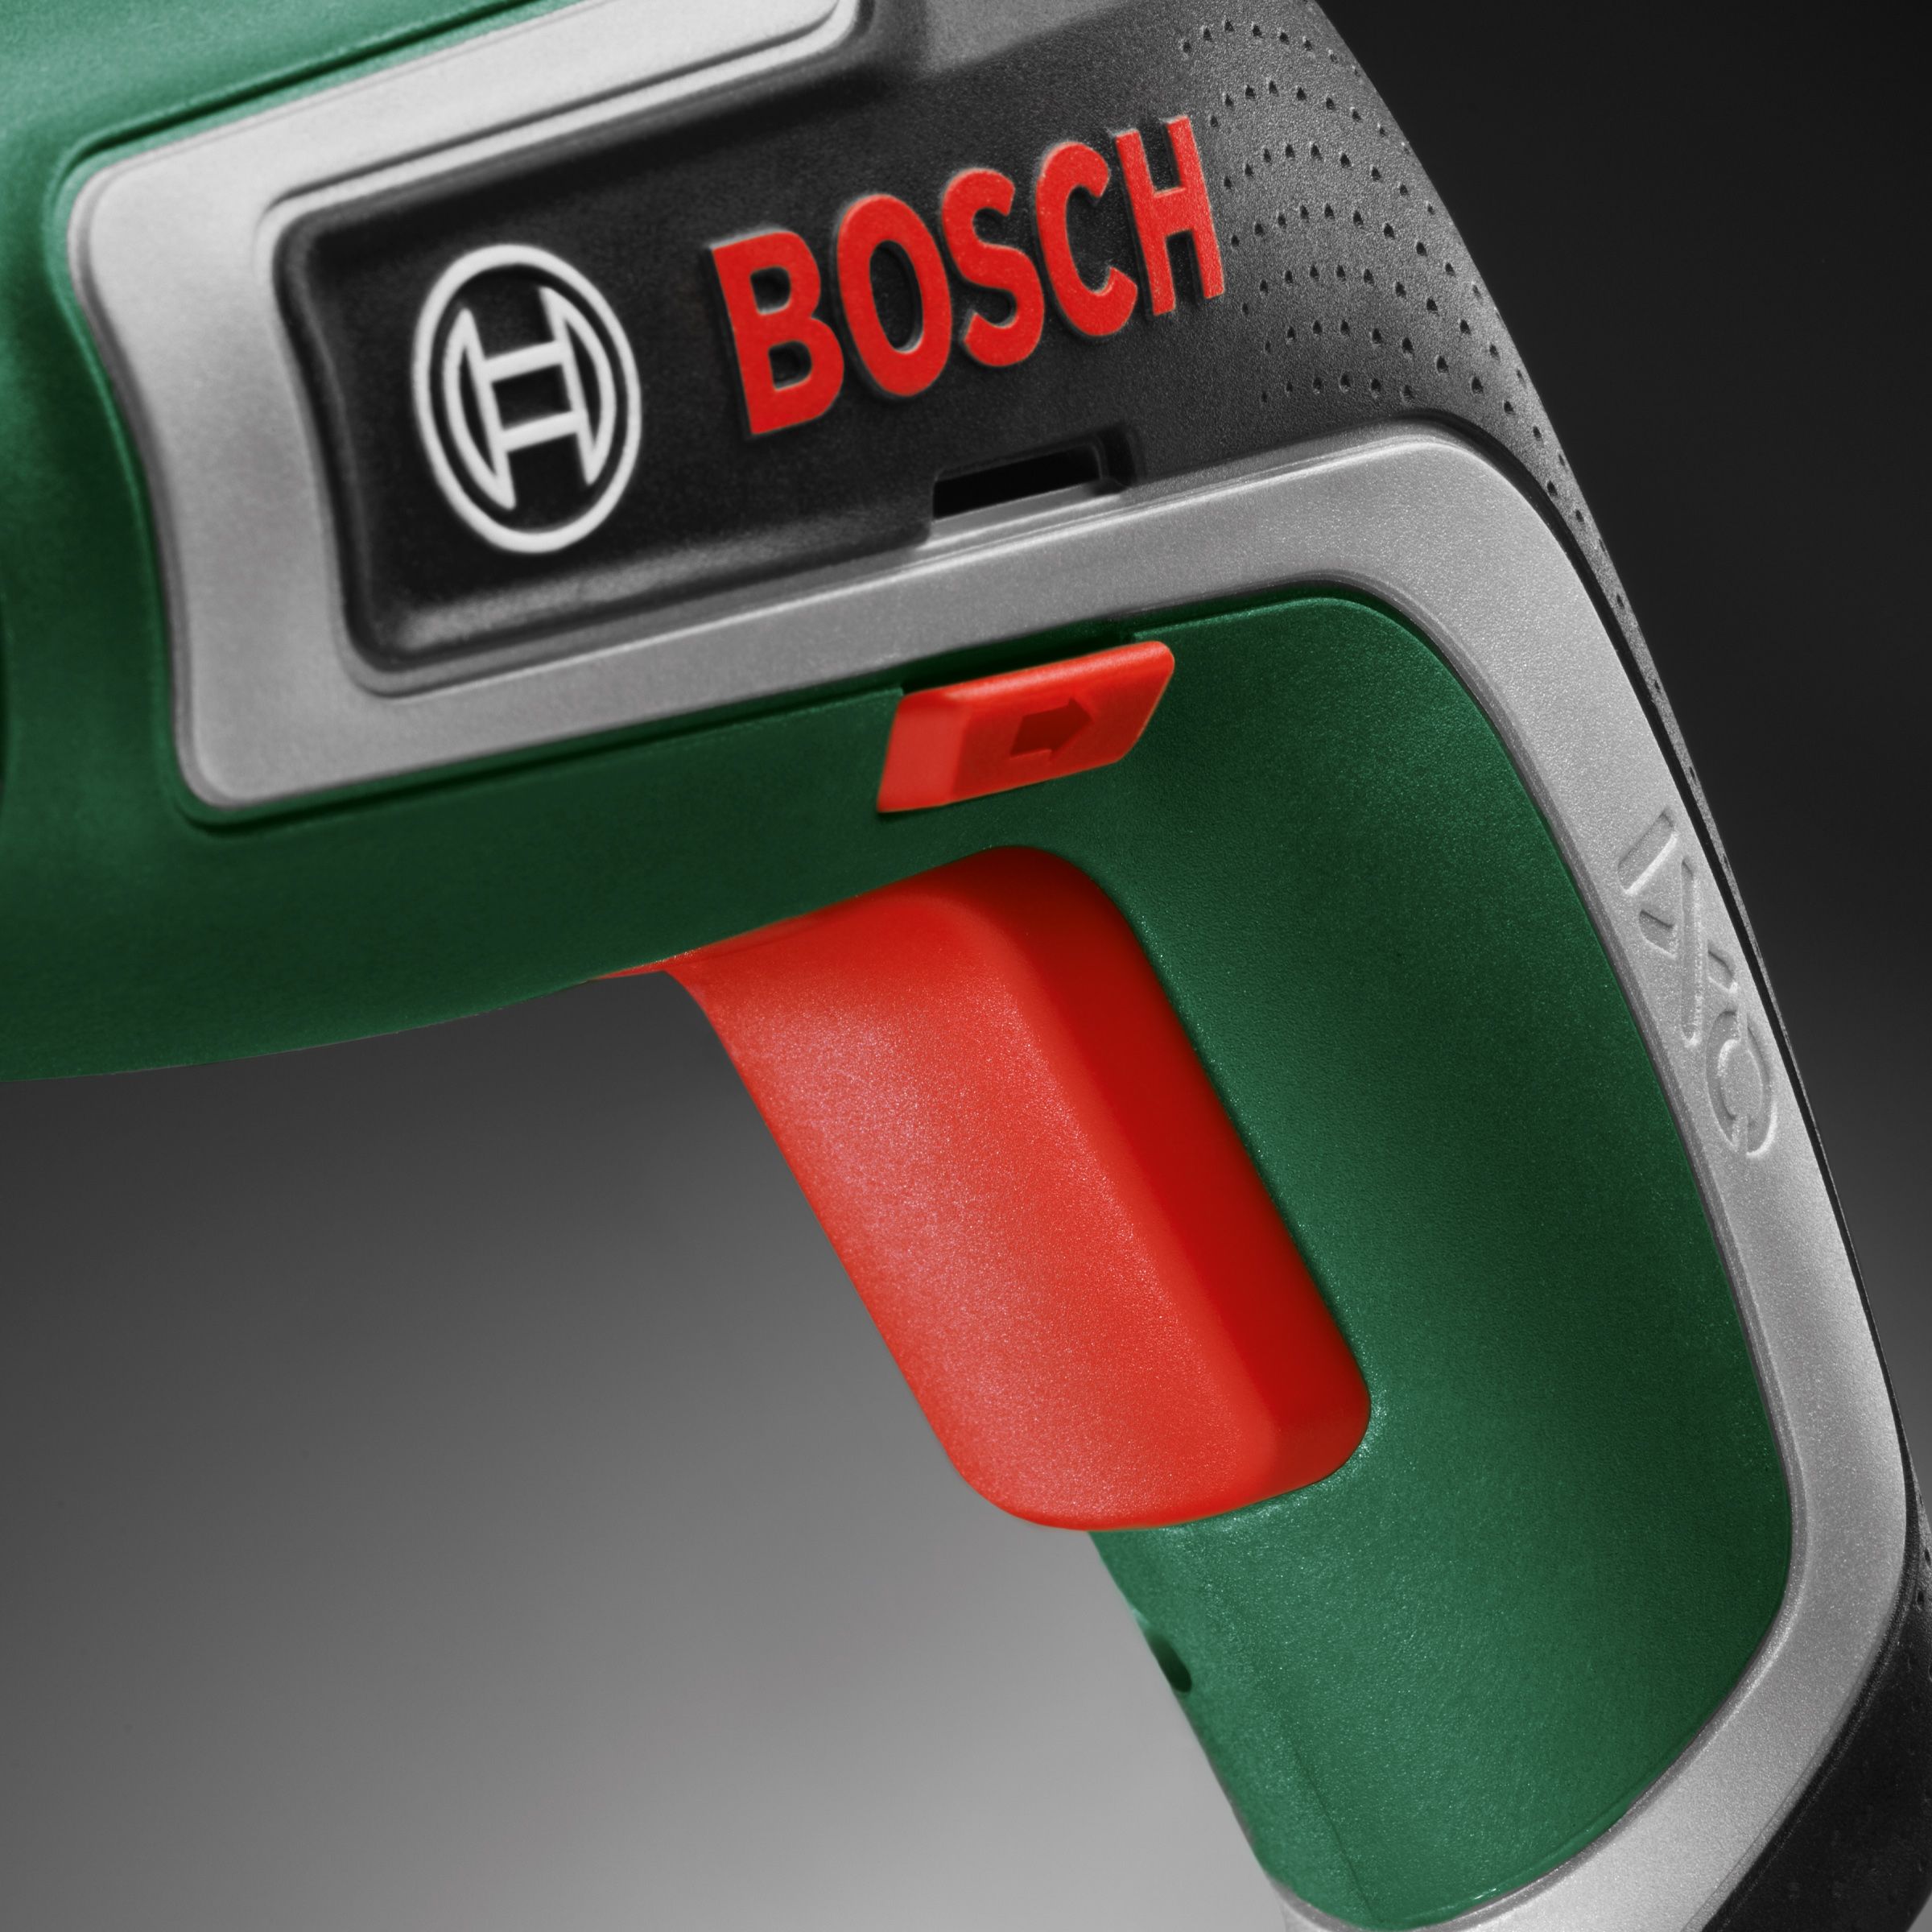 Bosch IXO V 3.6v Cordless Screwdriver